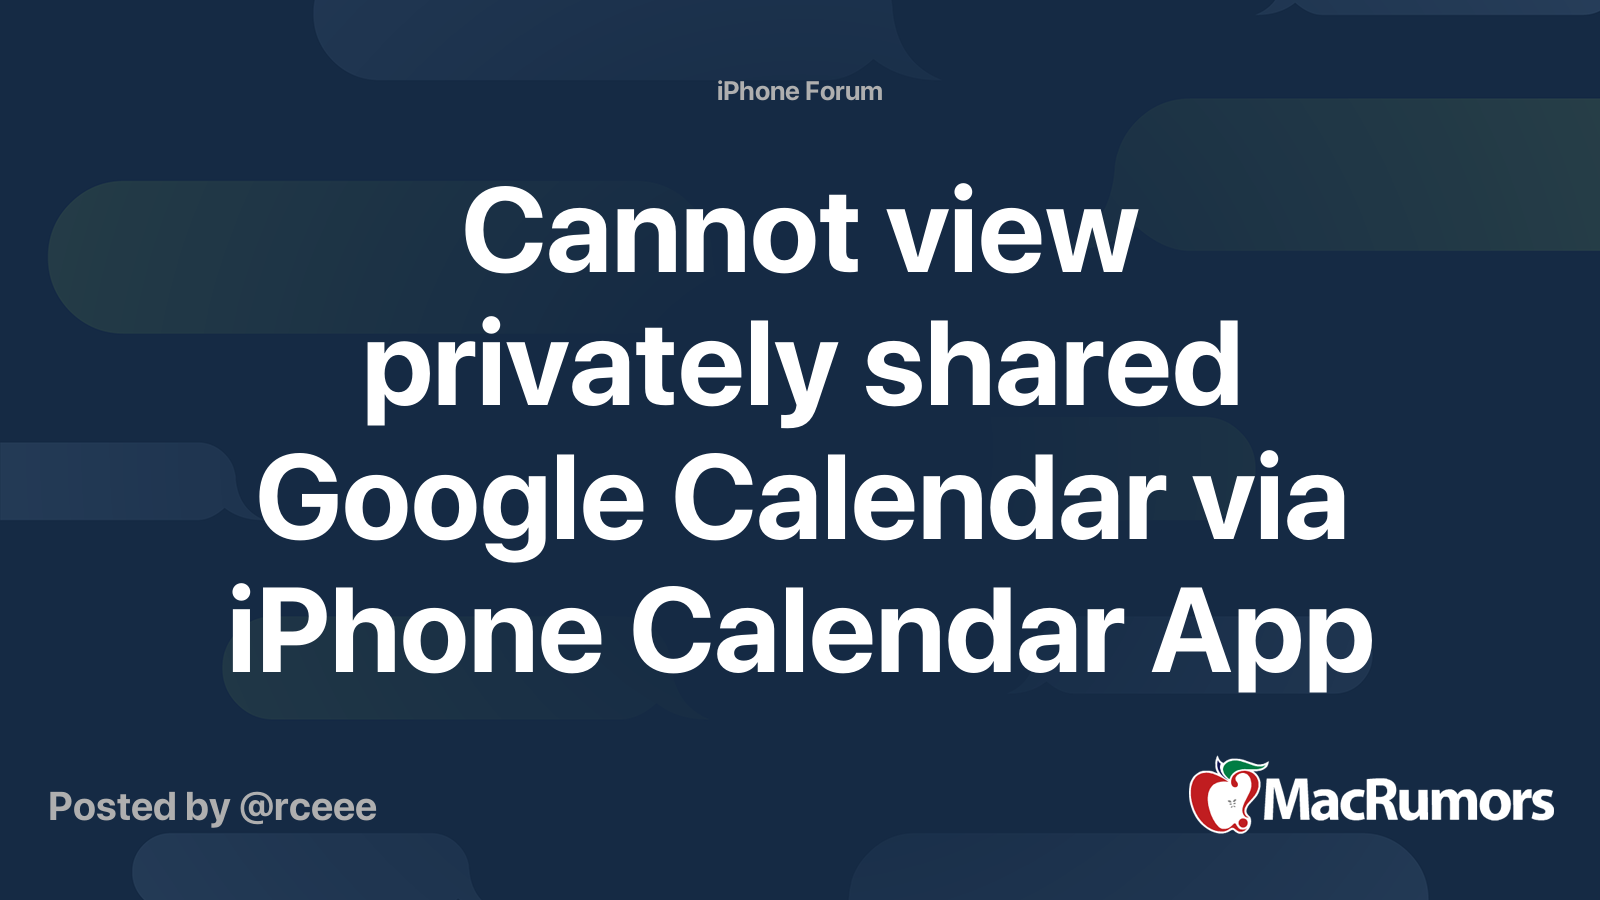 Cannot view privately shared Google Calendar via iPhone Calendar App